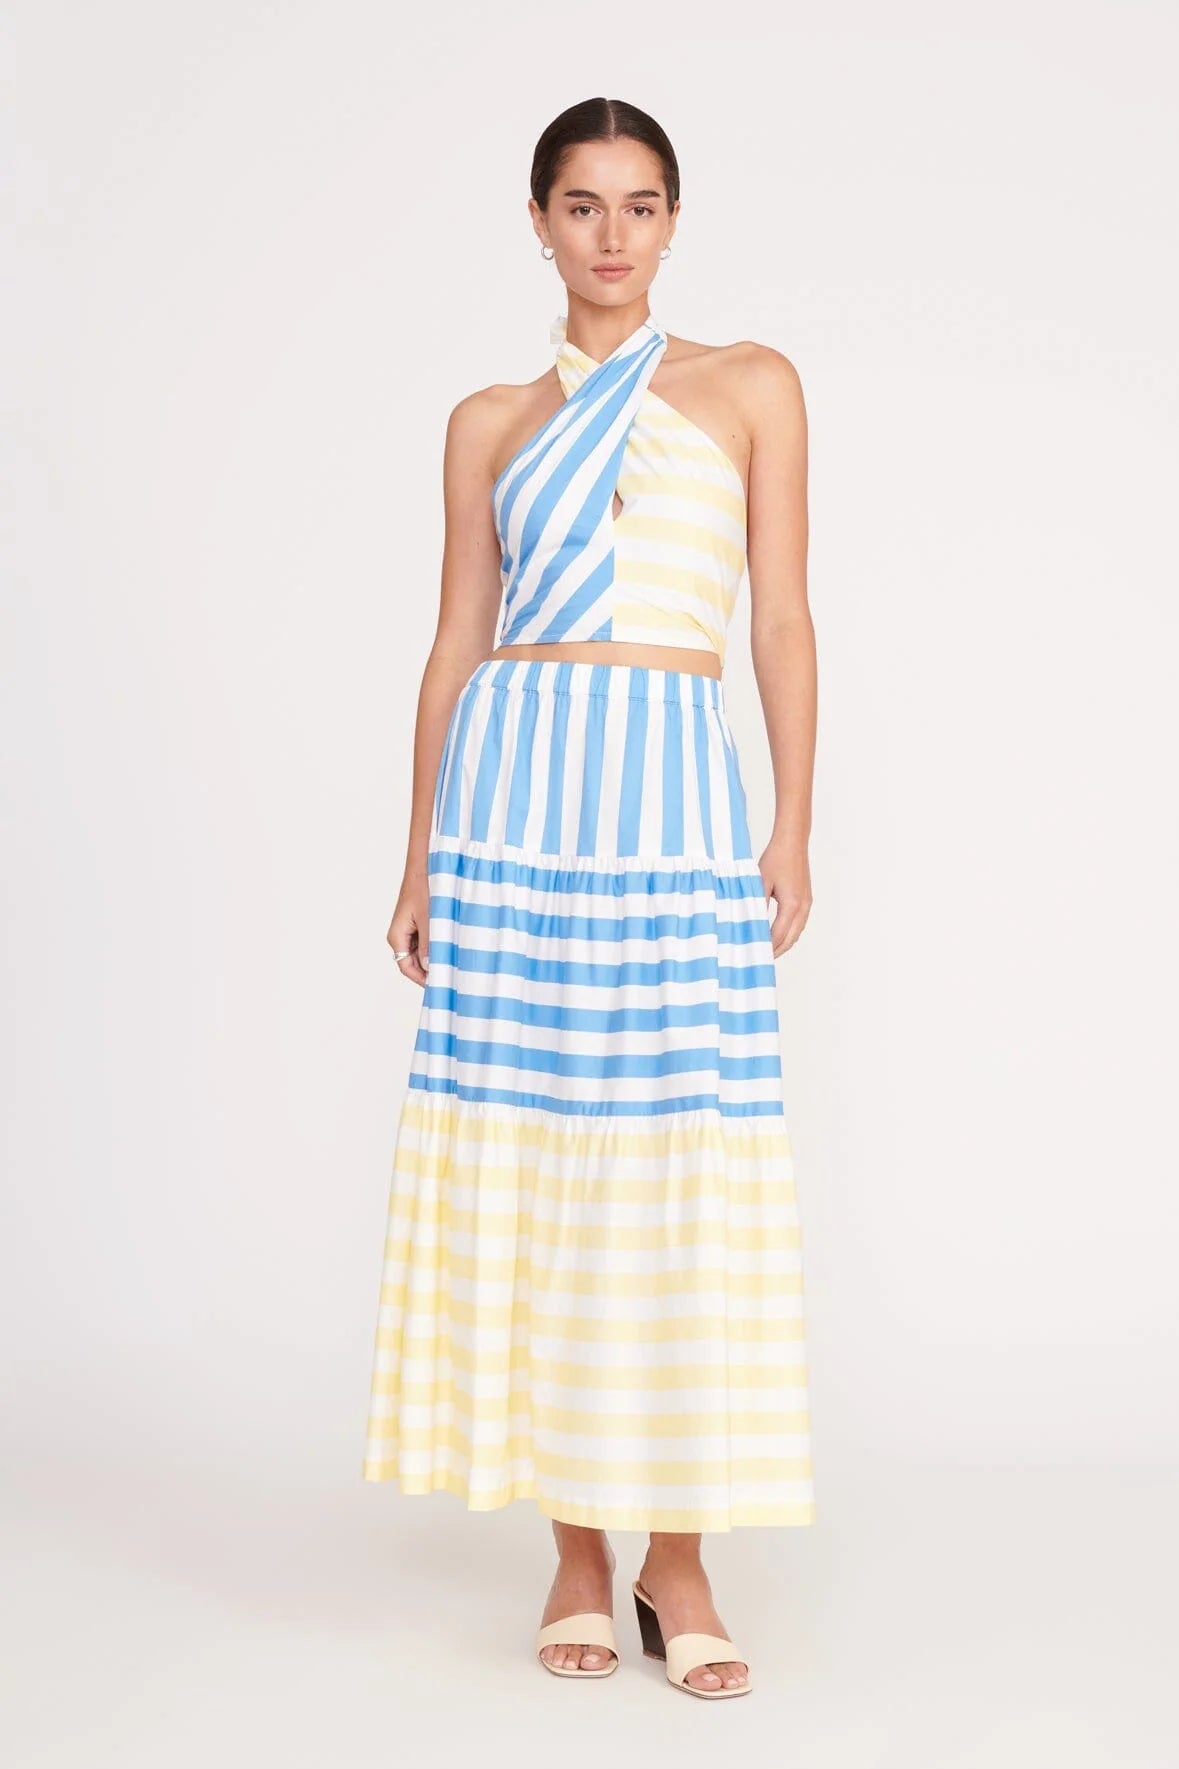 Idalino skirt - buttercup stripe